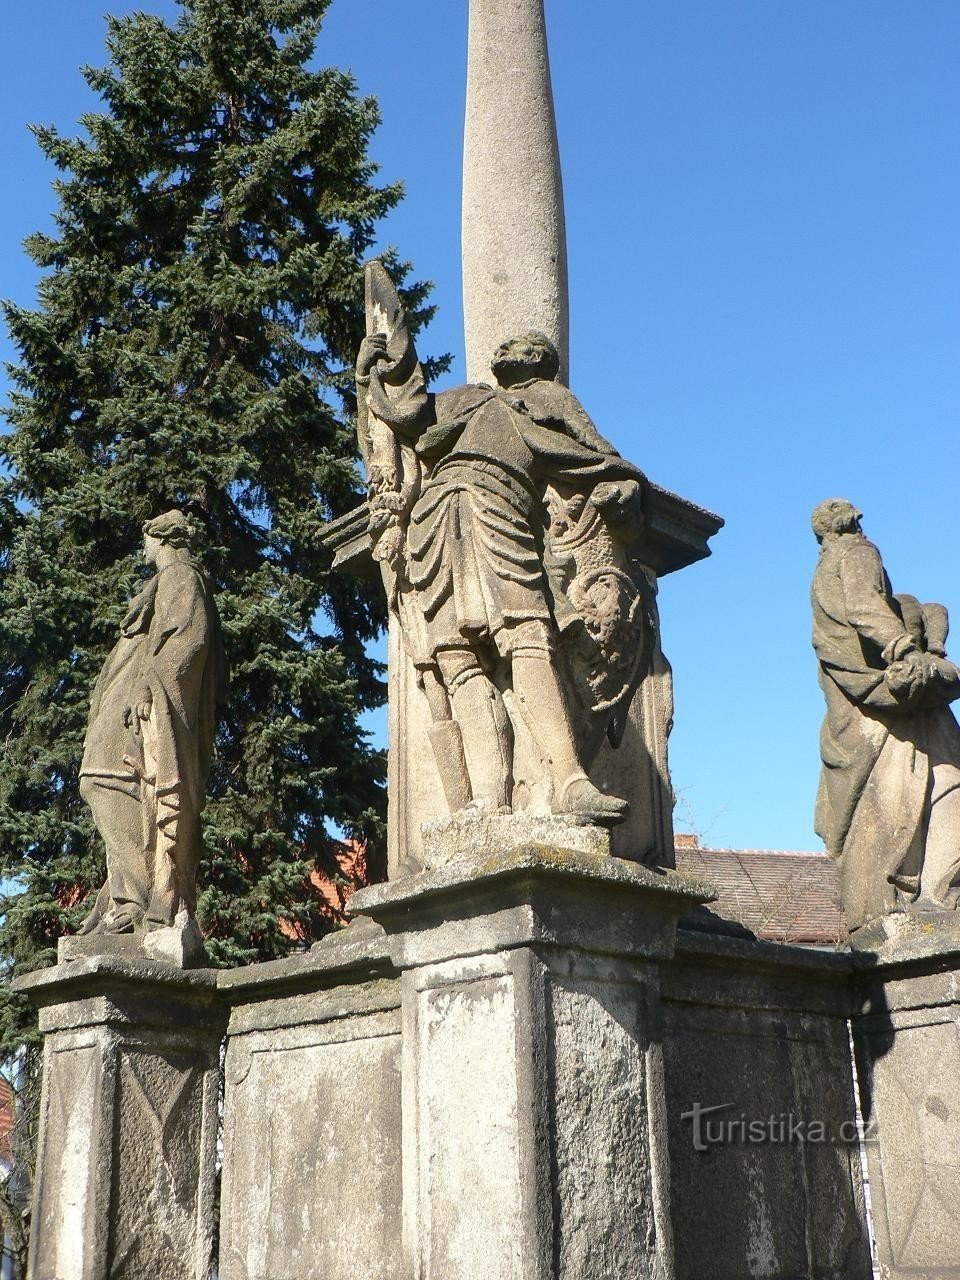 Statue of St. Wenceslas